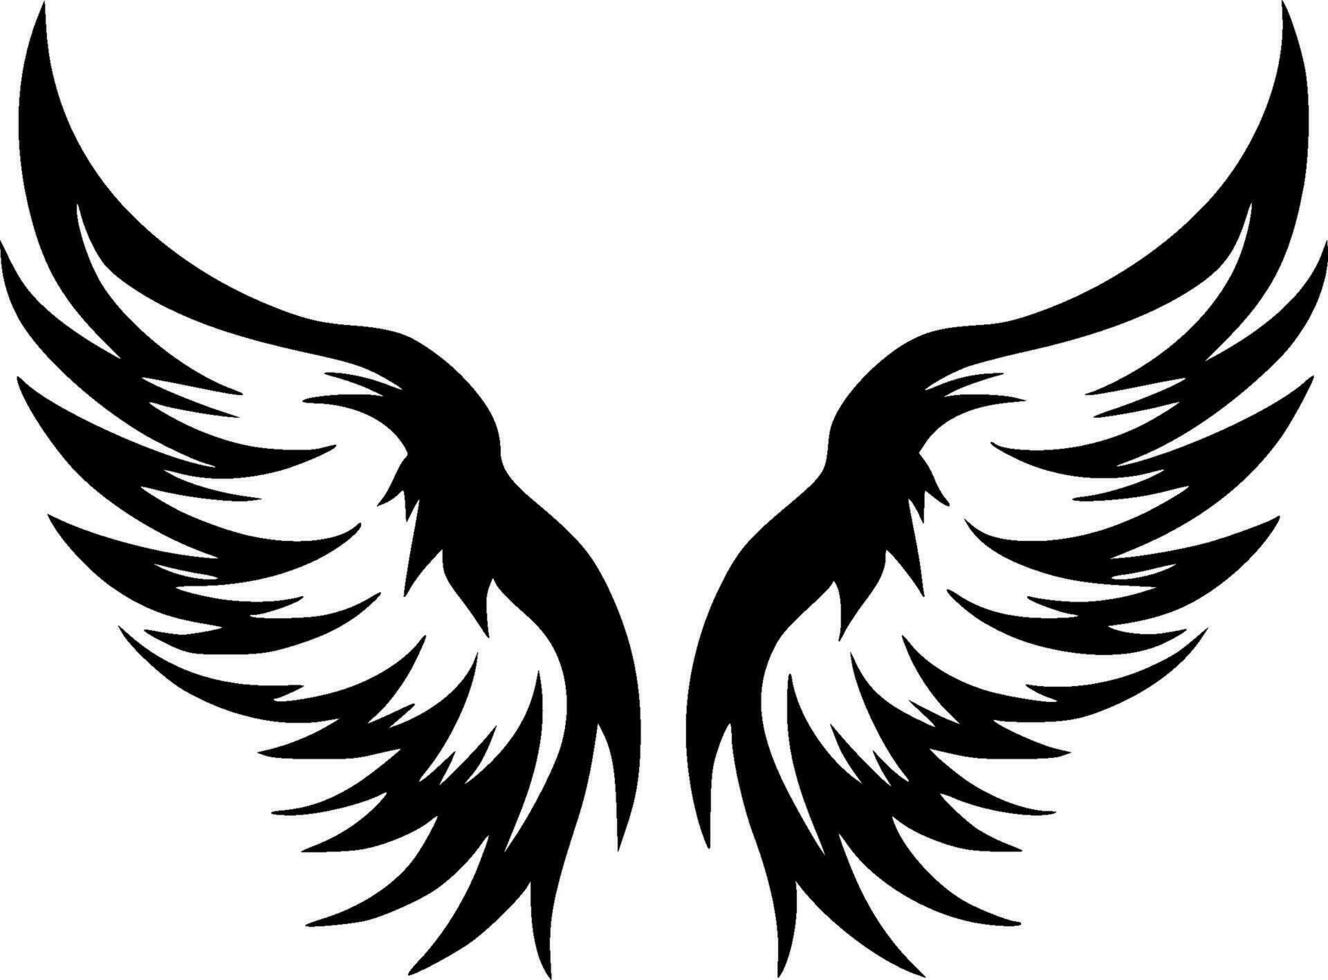 Angel Wings - Minimalist and Flat Logo - Vector illustration